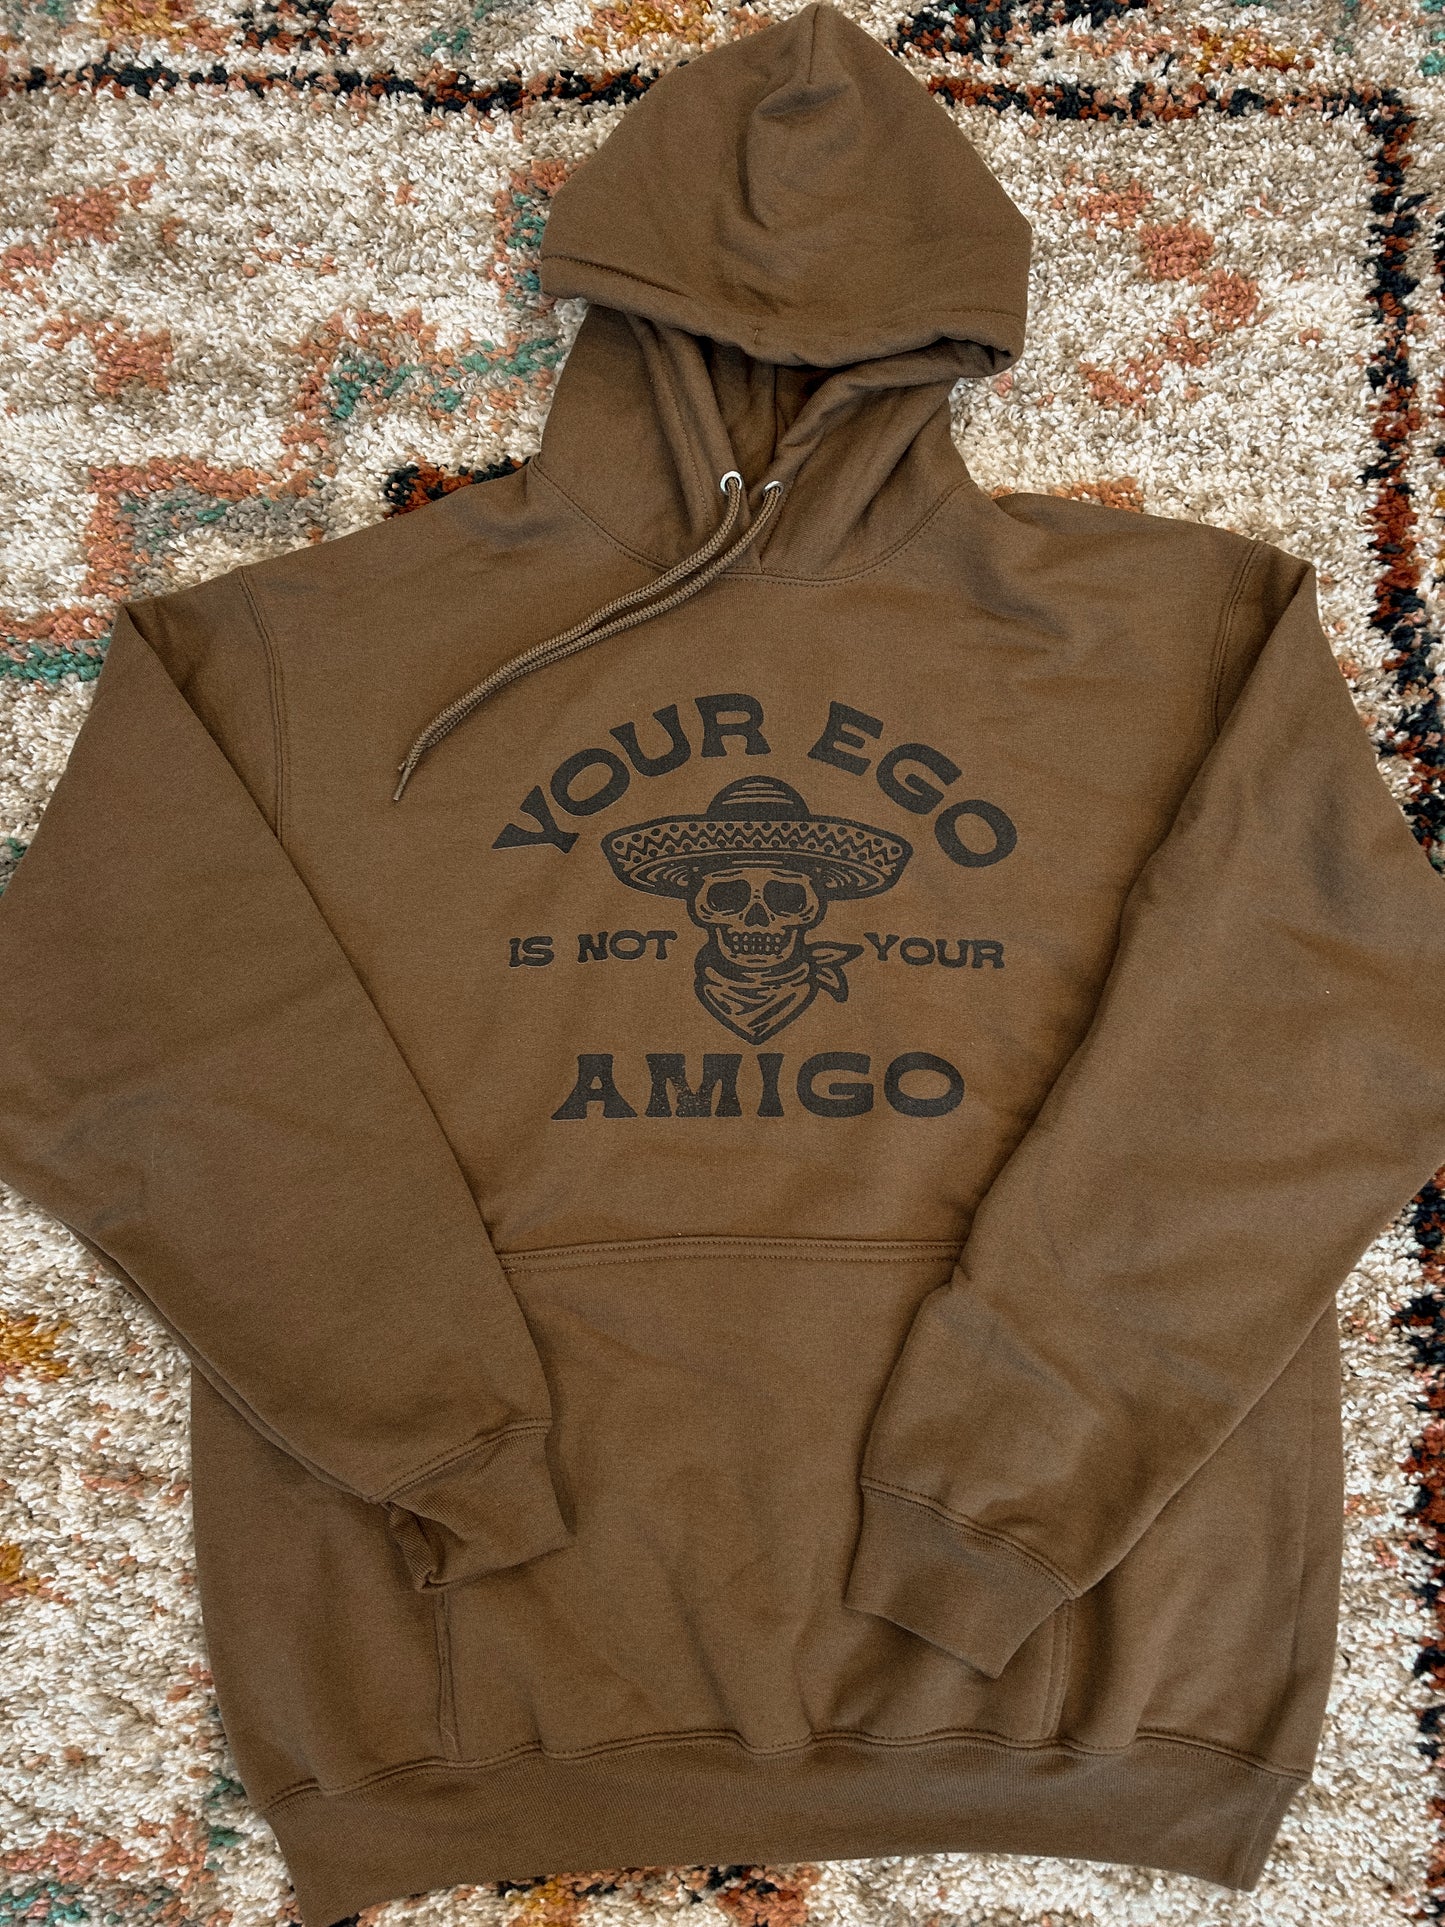 Not your amigo hoodie